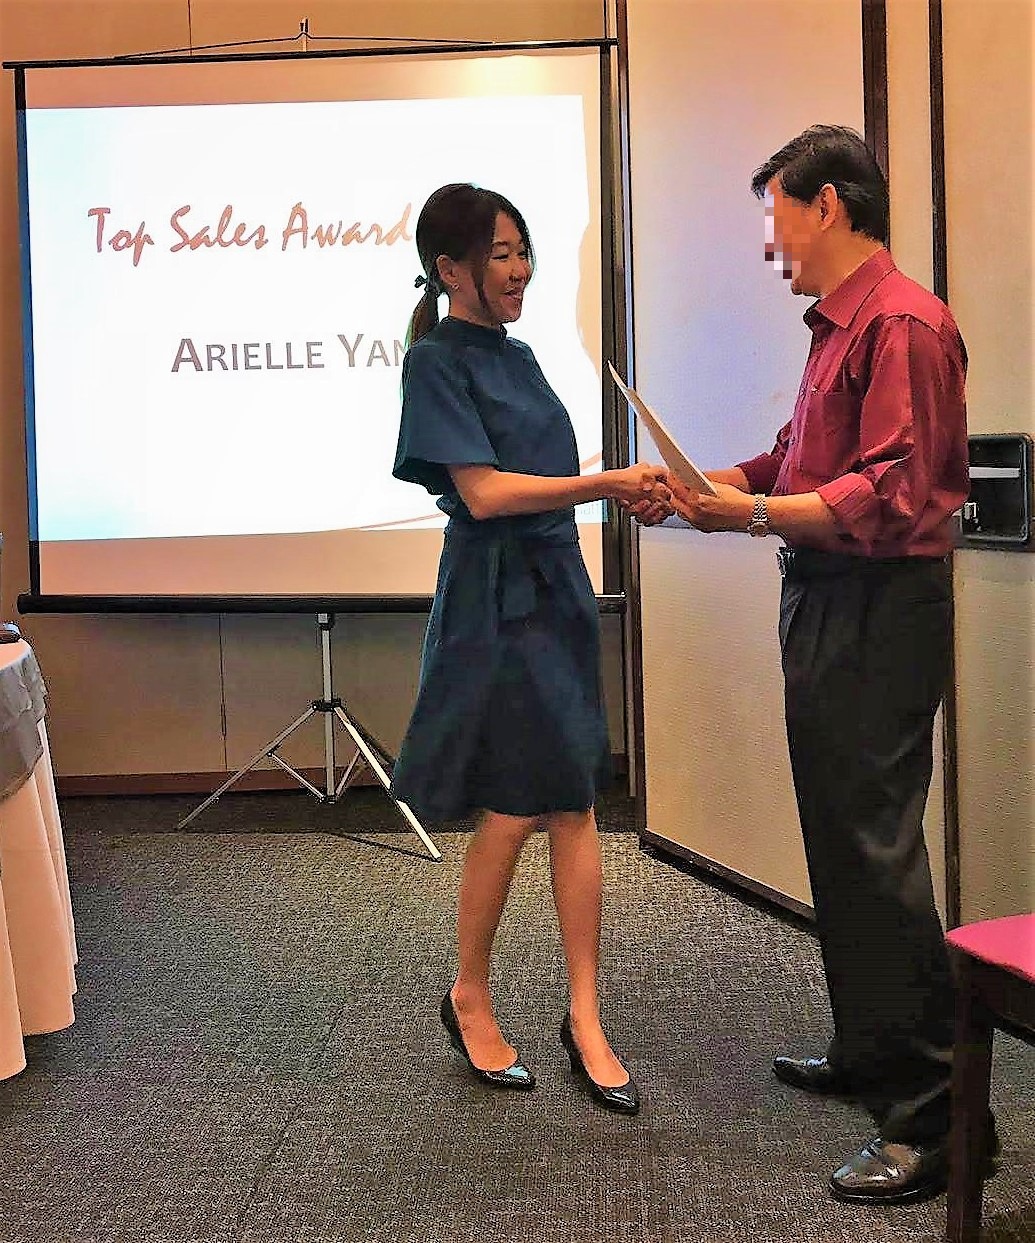 Arielle receiving an award at work. 